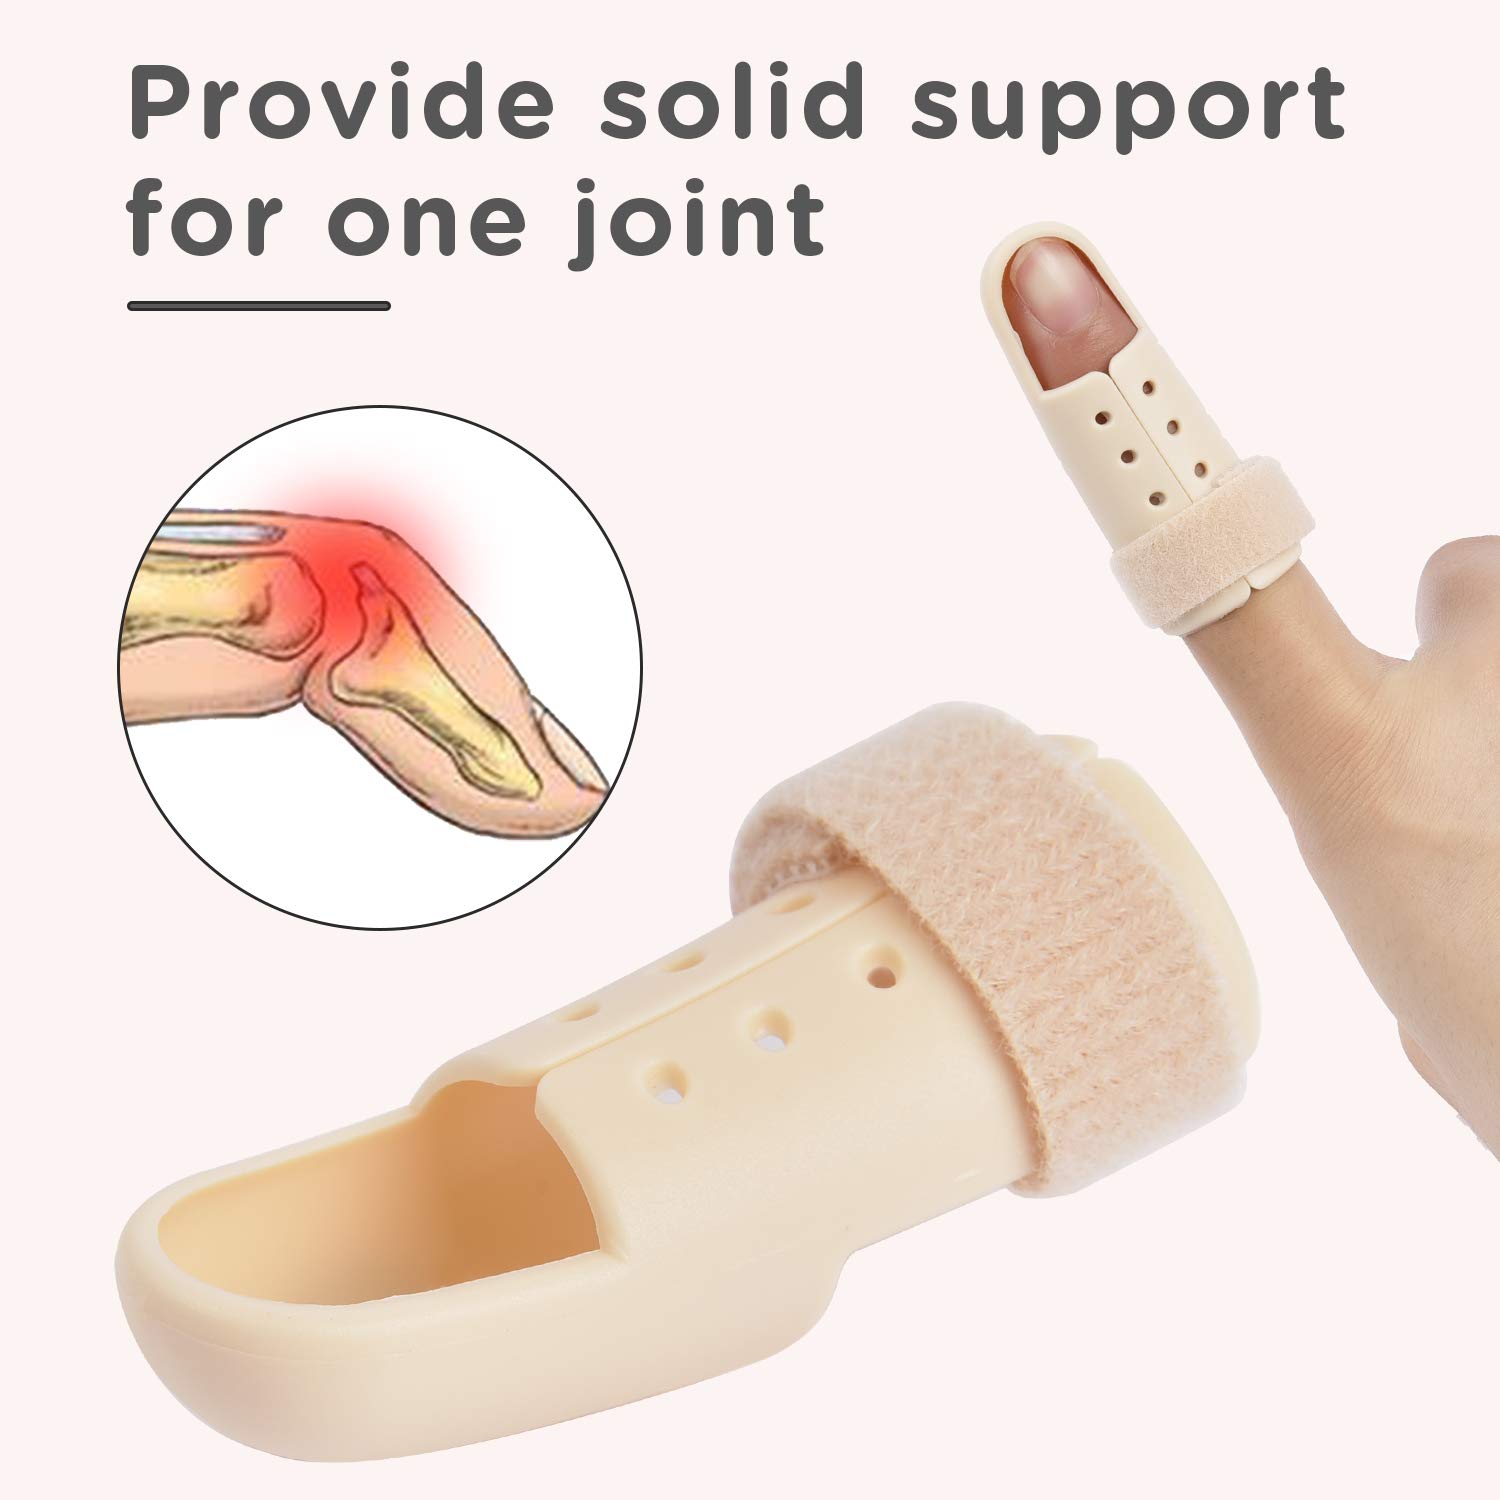 Hammer finger splint brace protector justerbar brudt finger joint stabilizer straightening arthritis knuck immobilisering